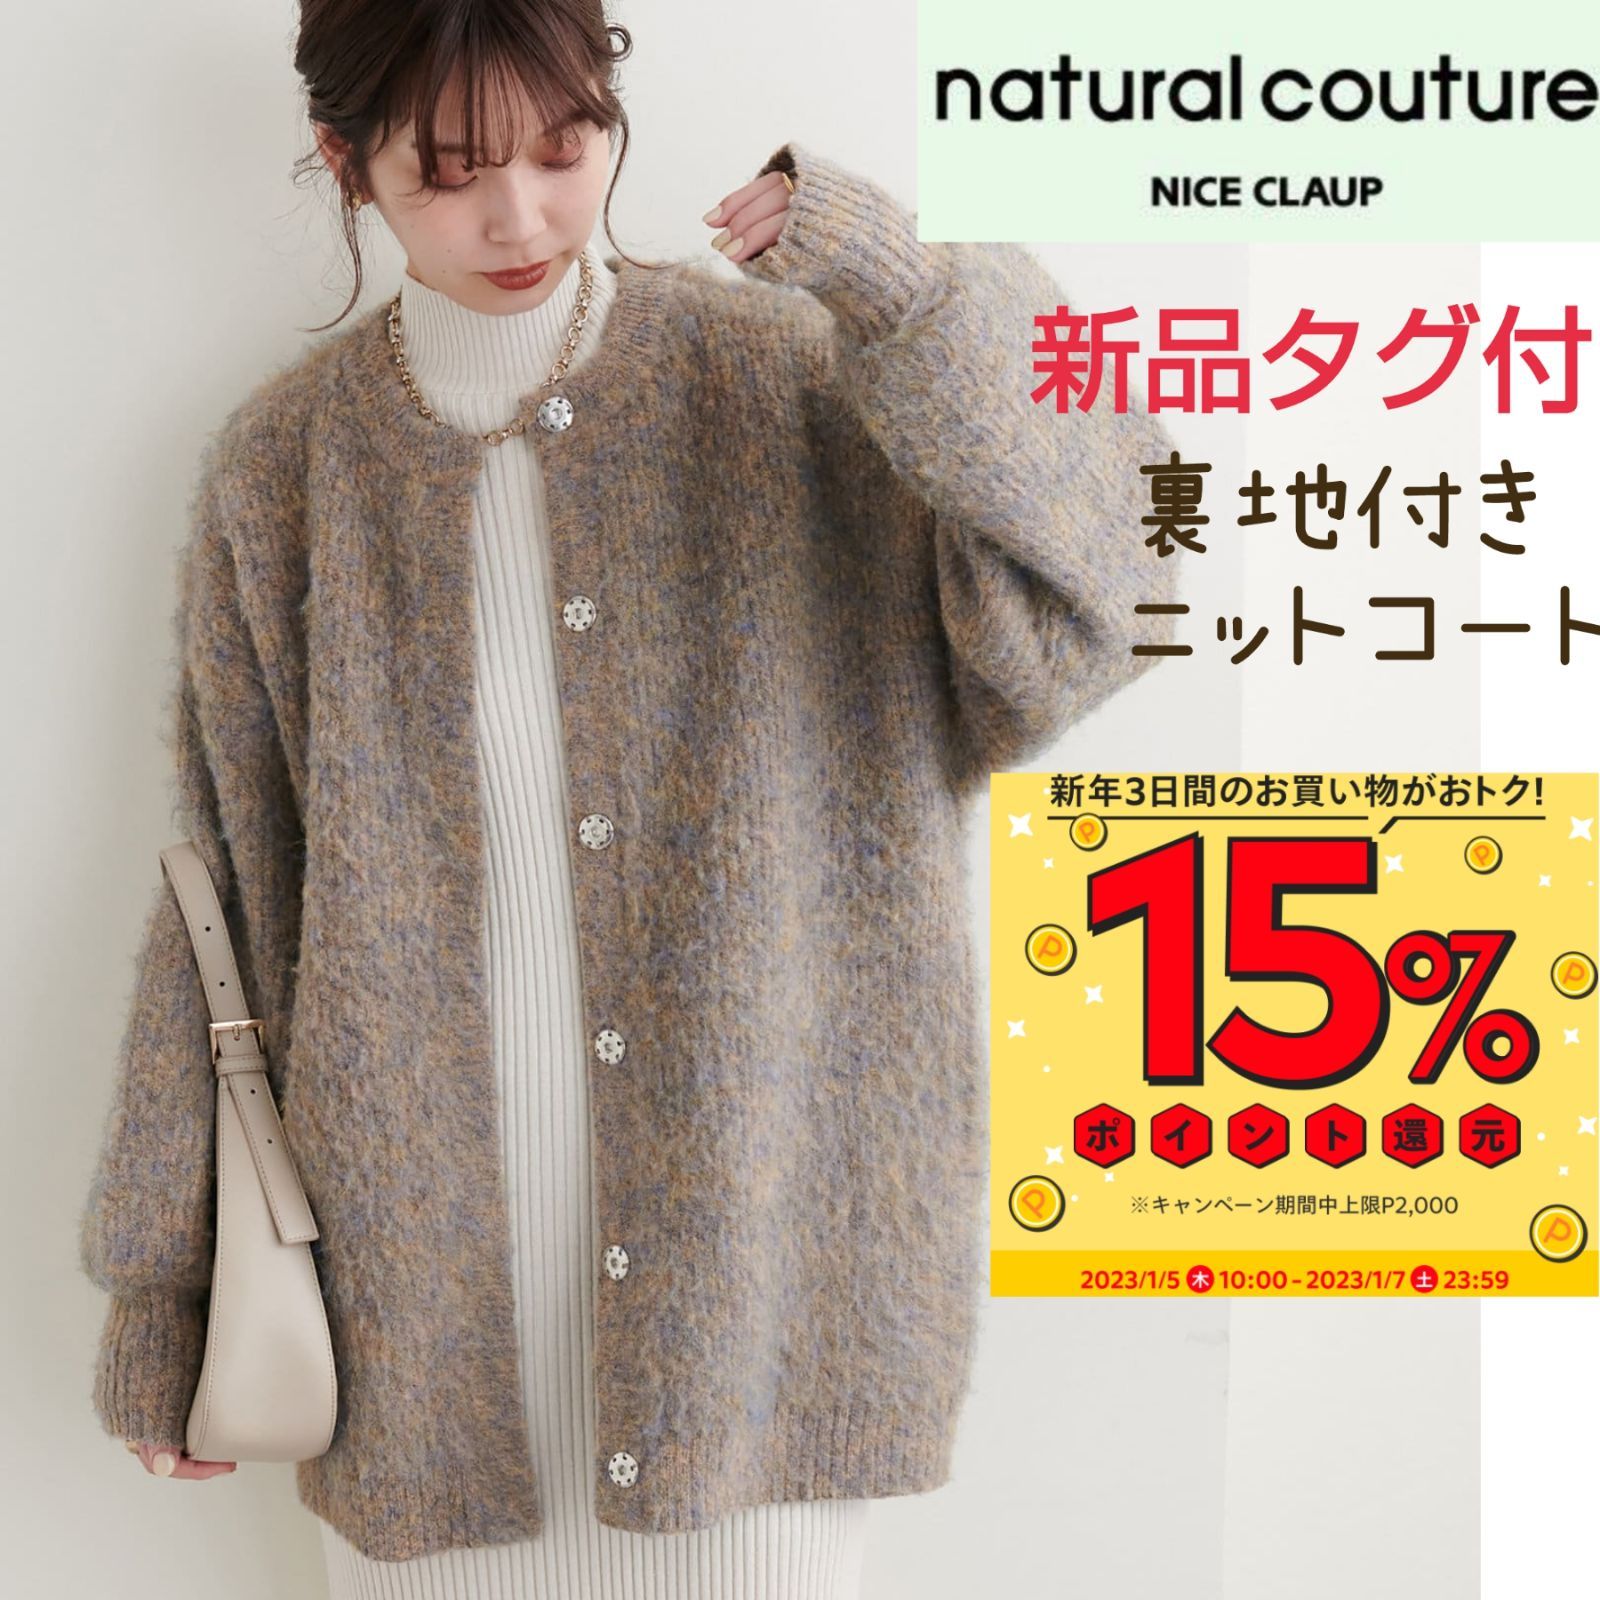 natural couture◇カラーメランジ裏付きニットコート - daymarethegame.com